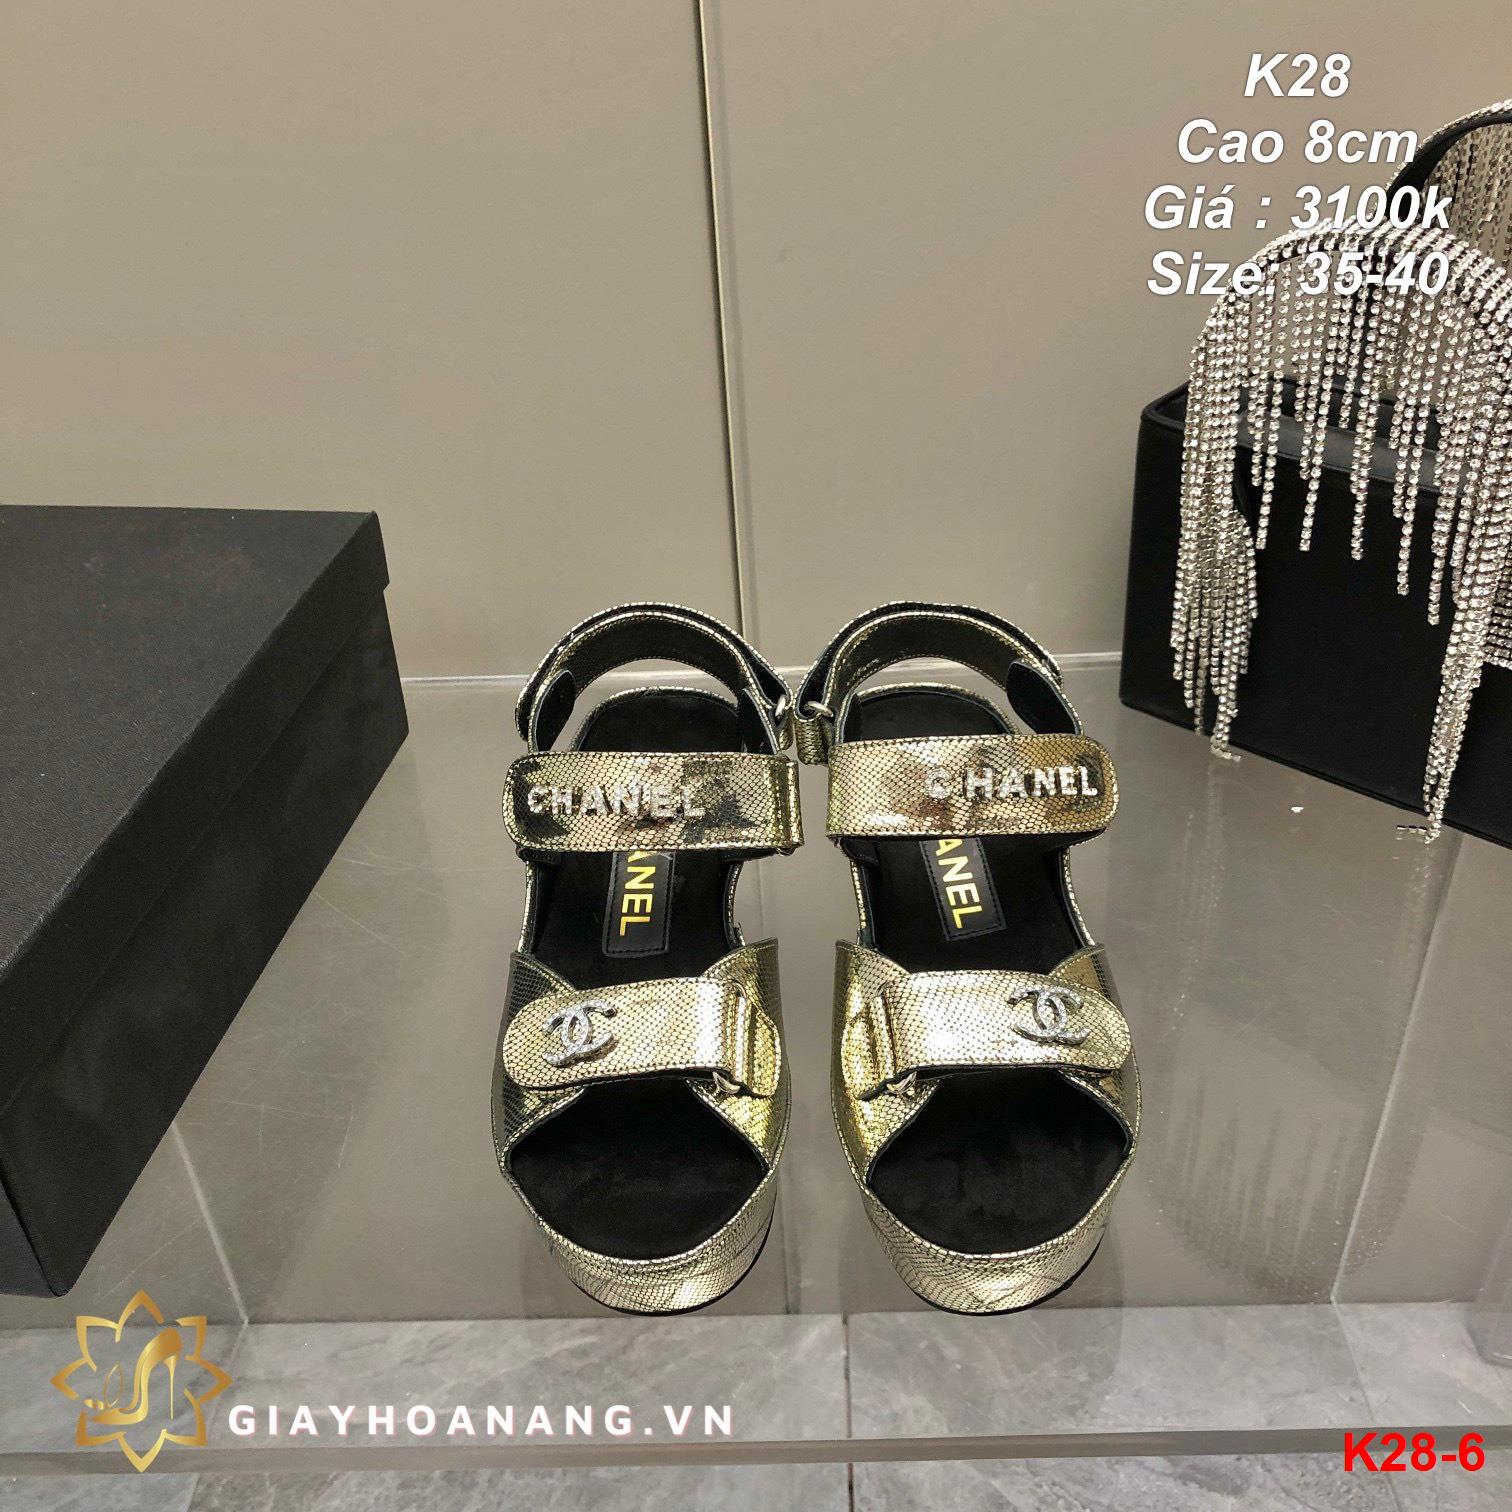 K28-6 Chanel sandal cao 8cm siêu cấp